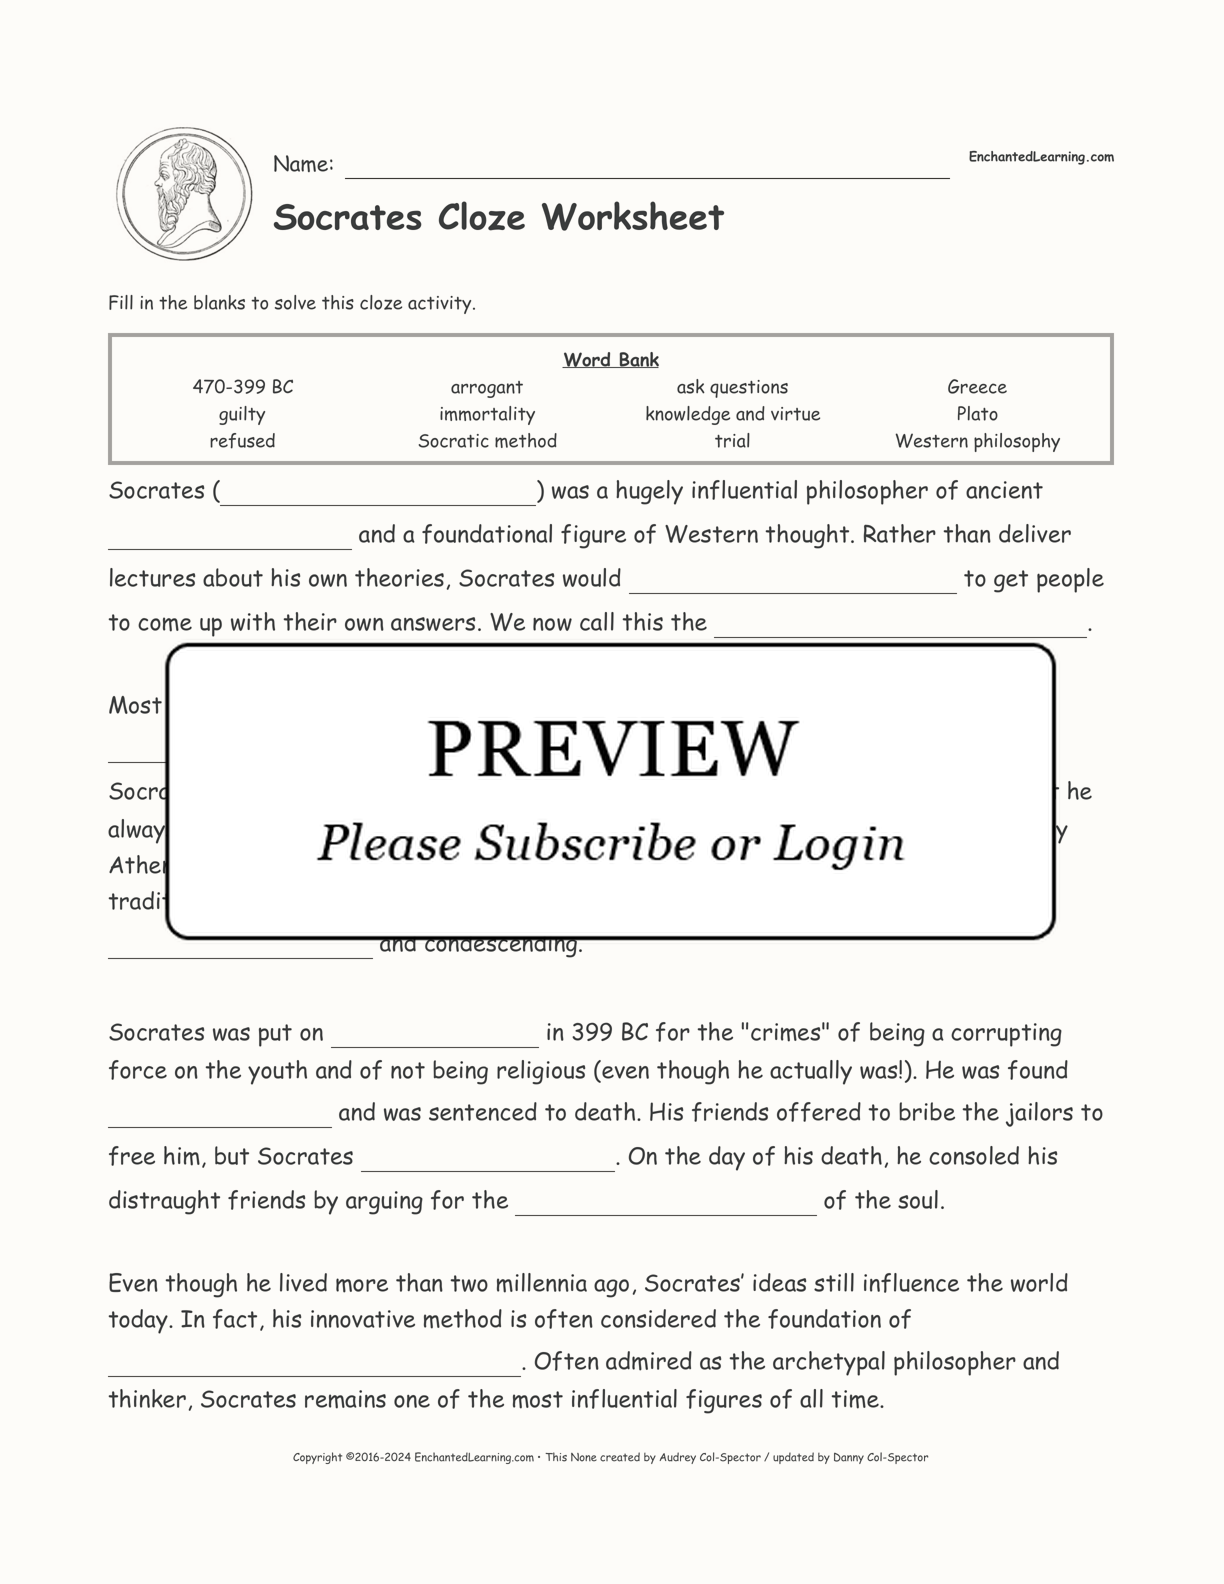 Socrates Cloze Worksheet interactive worksheet page 1